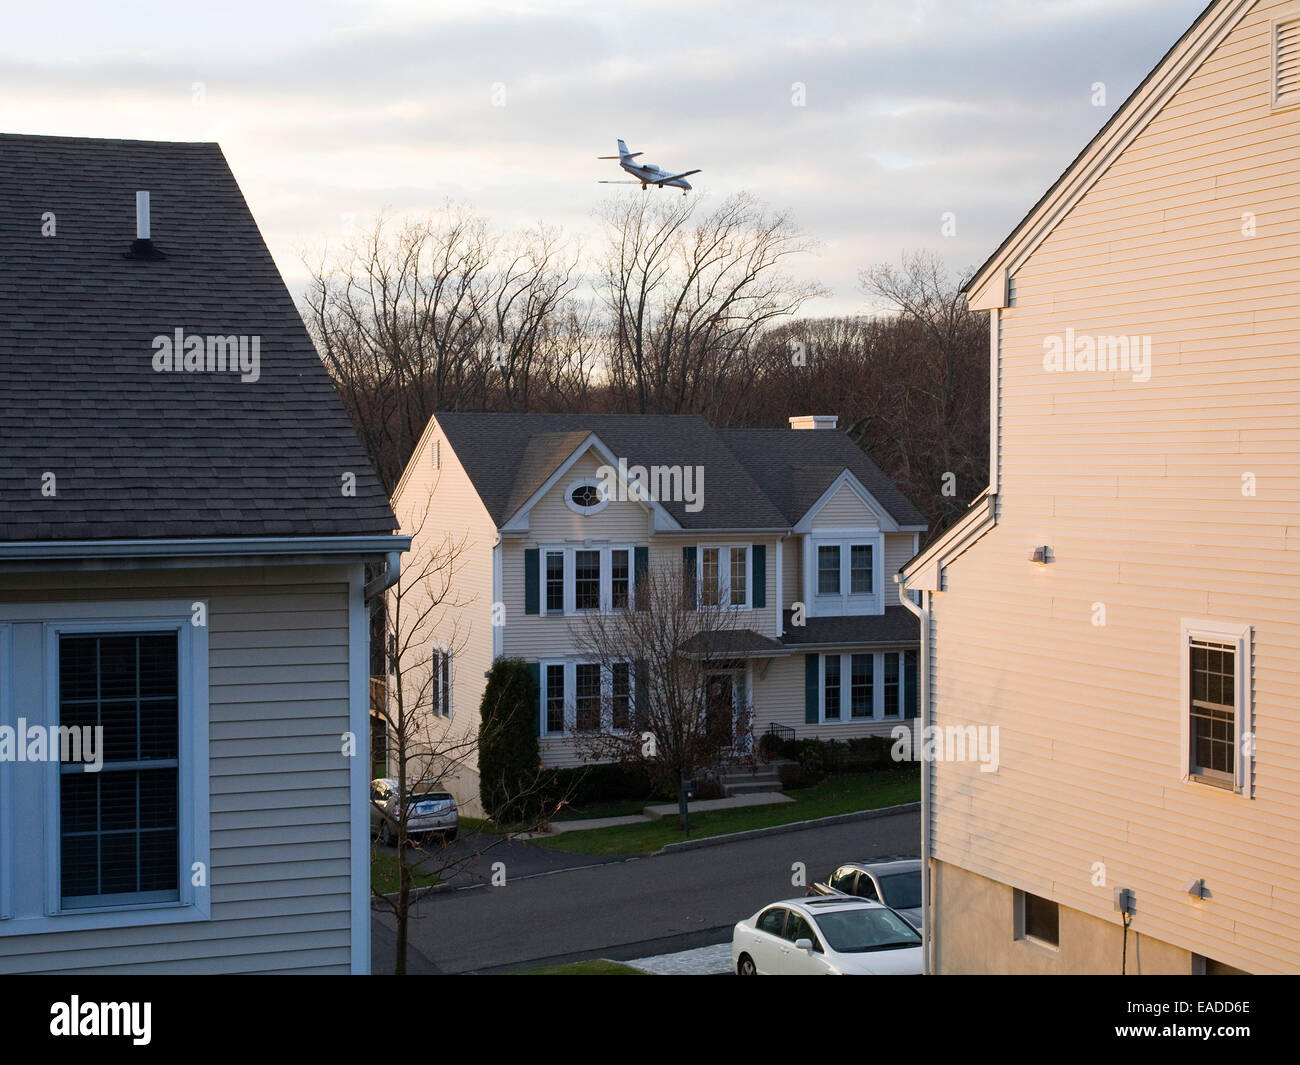 suburban development with airplane flying overhead Stock Photo